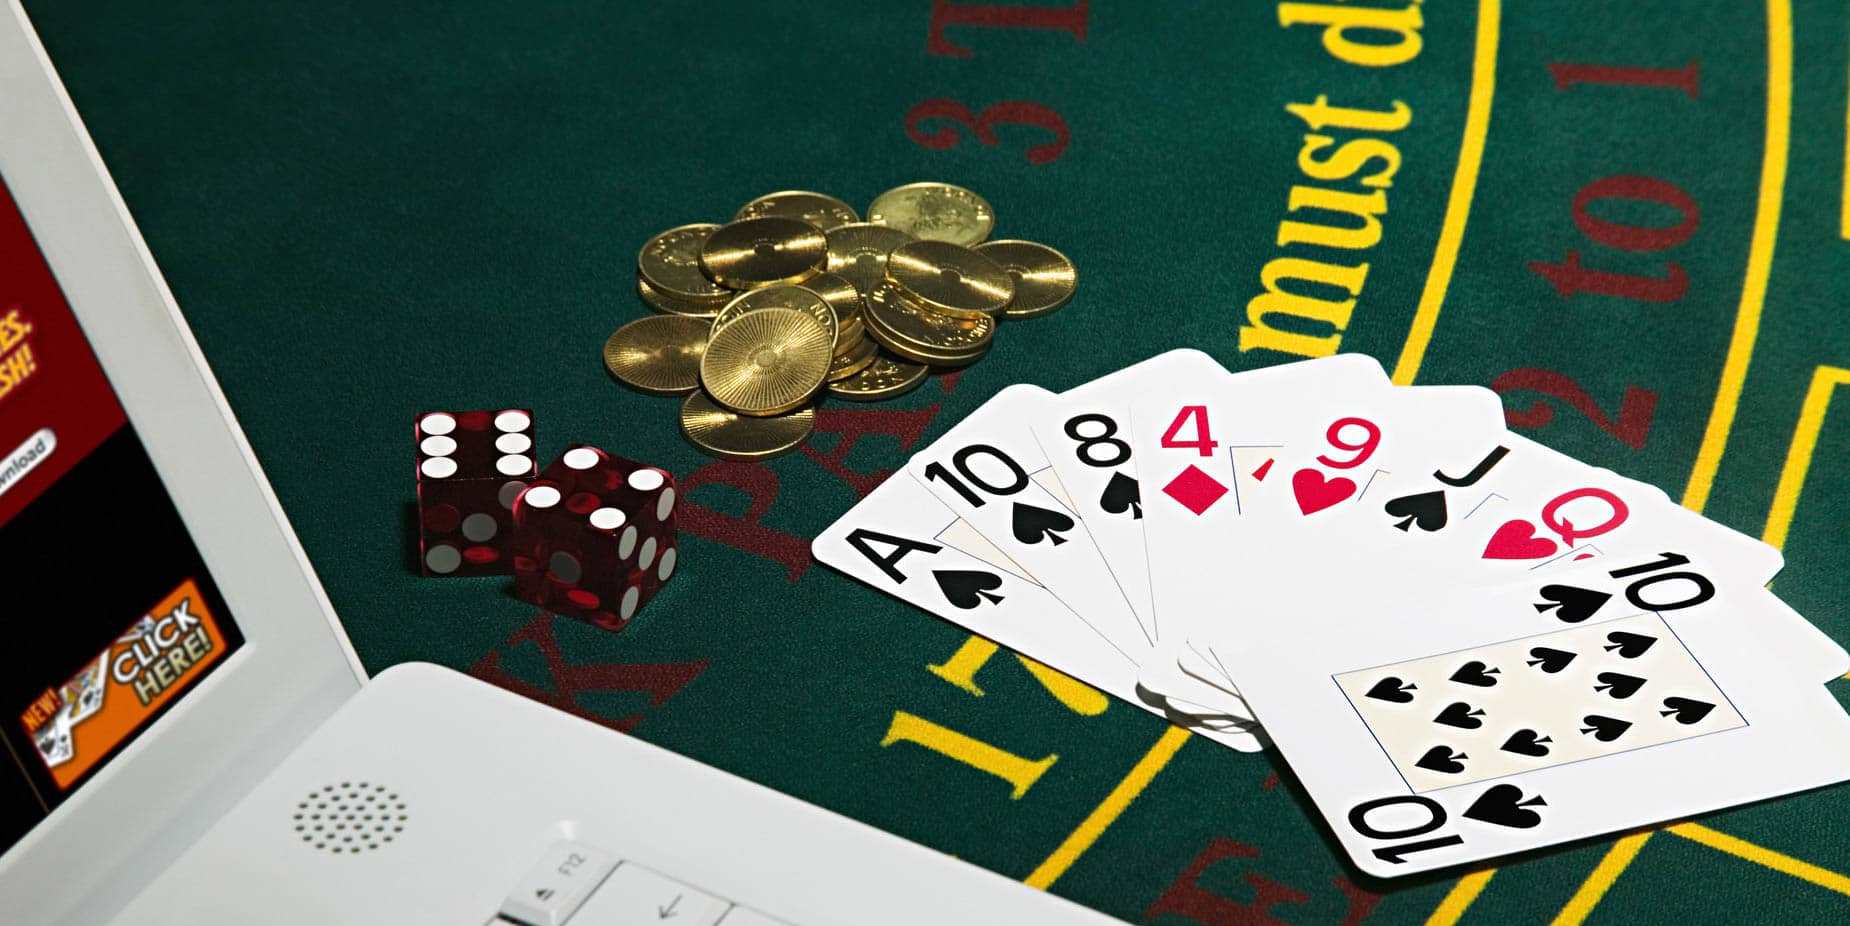 ucretsiz poker nasil oynanir